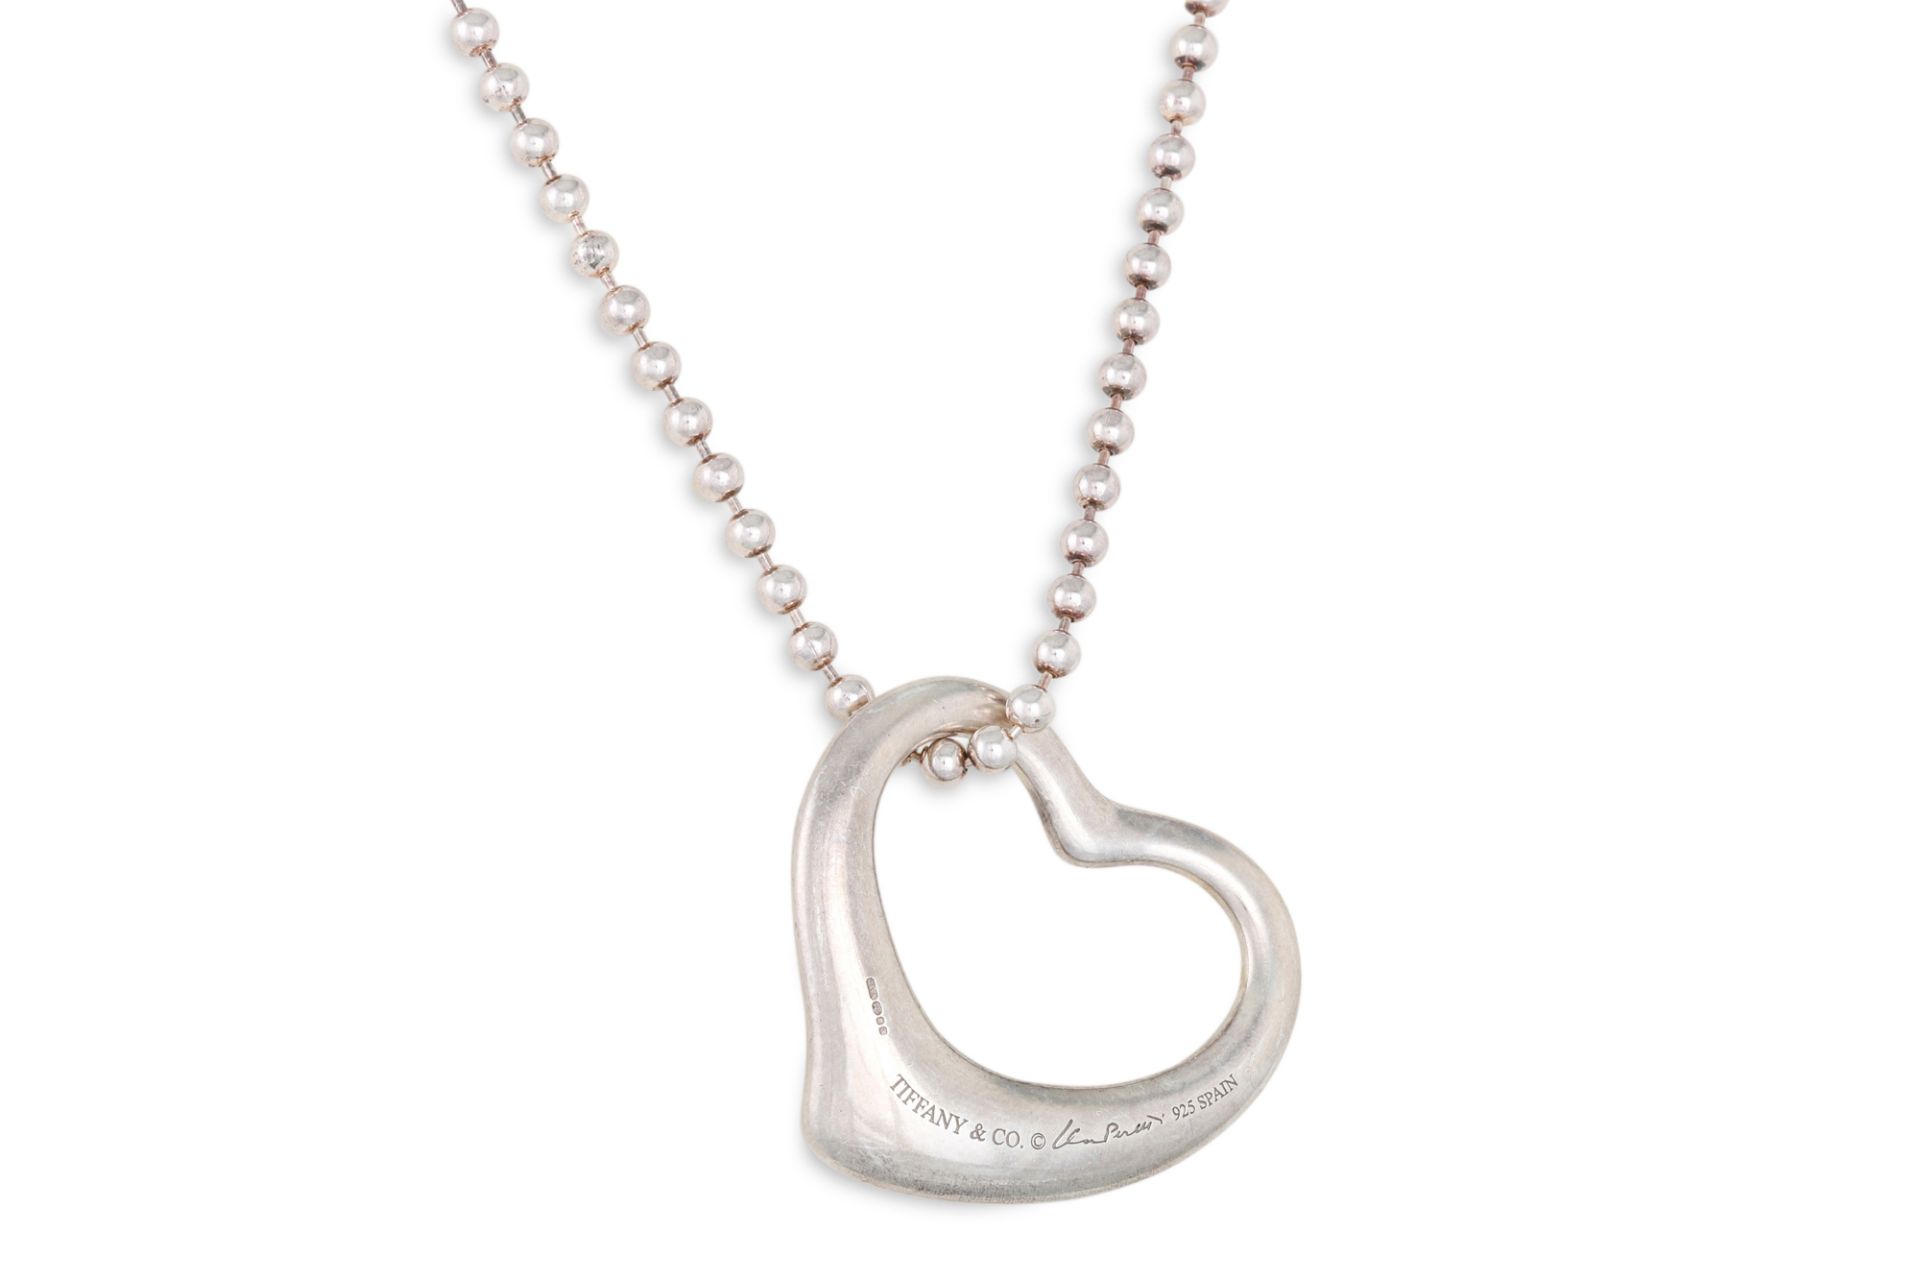 A SILVER TIFFANY HEART PENDANT, by Elsa Peretti, on a silver chain